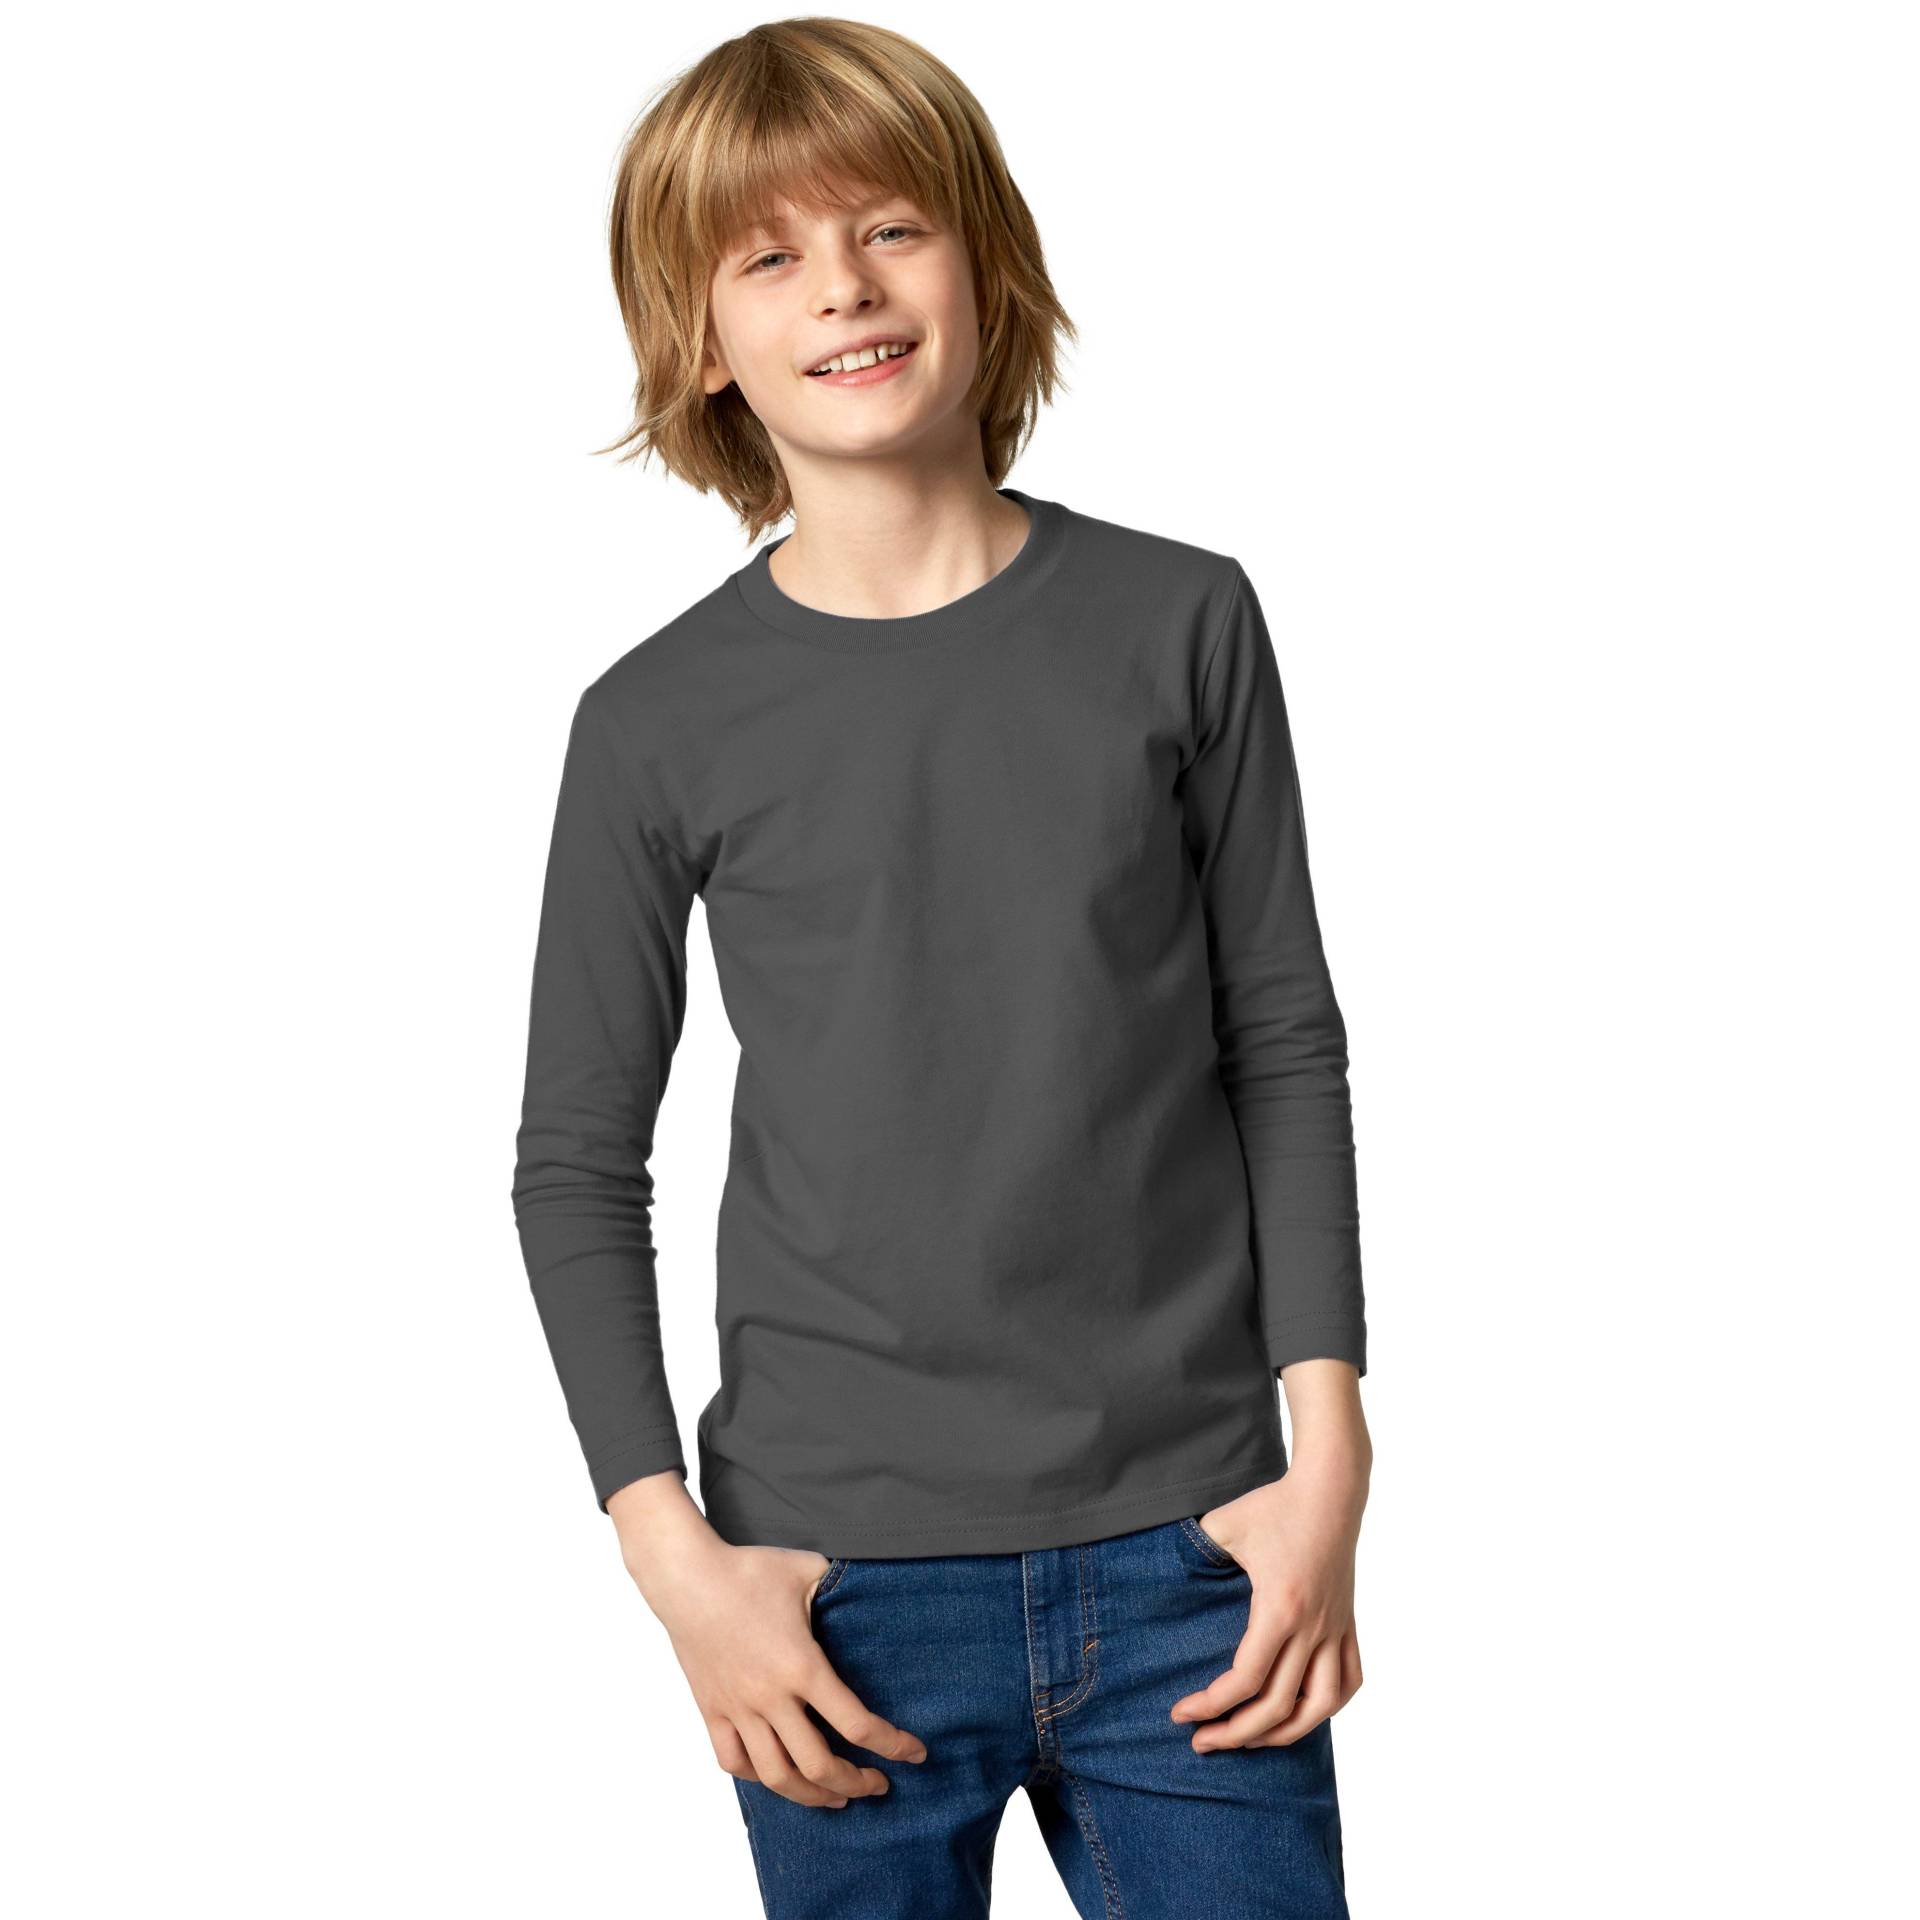 Langarm-shirt Kinder Jungen Grau 104 von Tectake